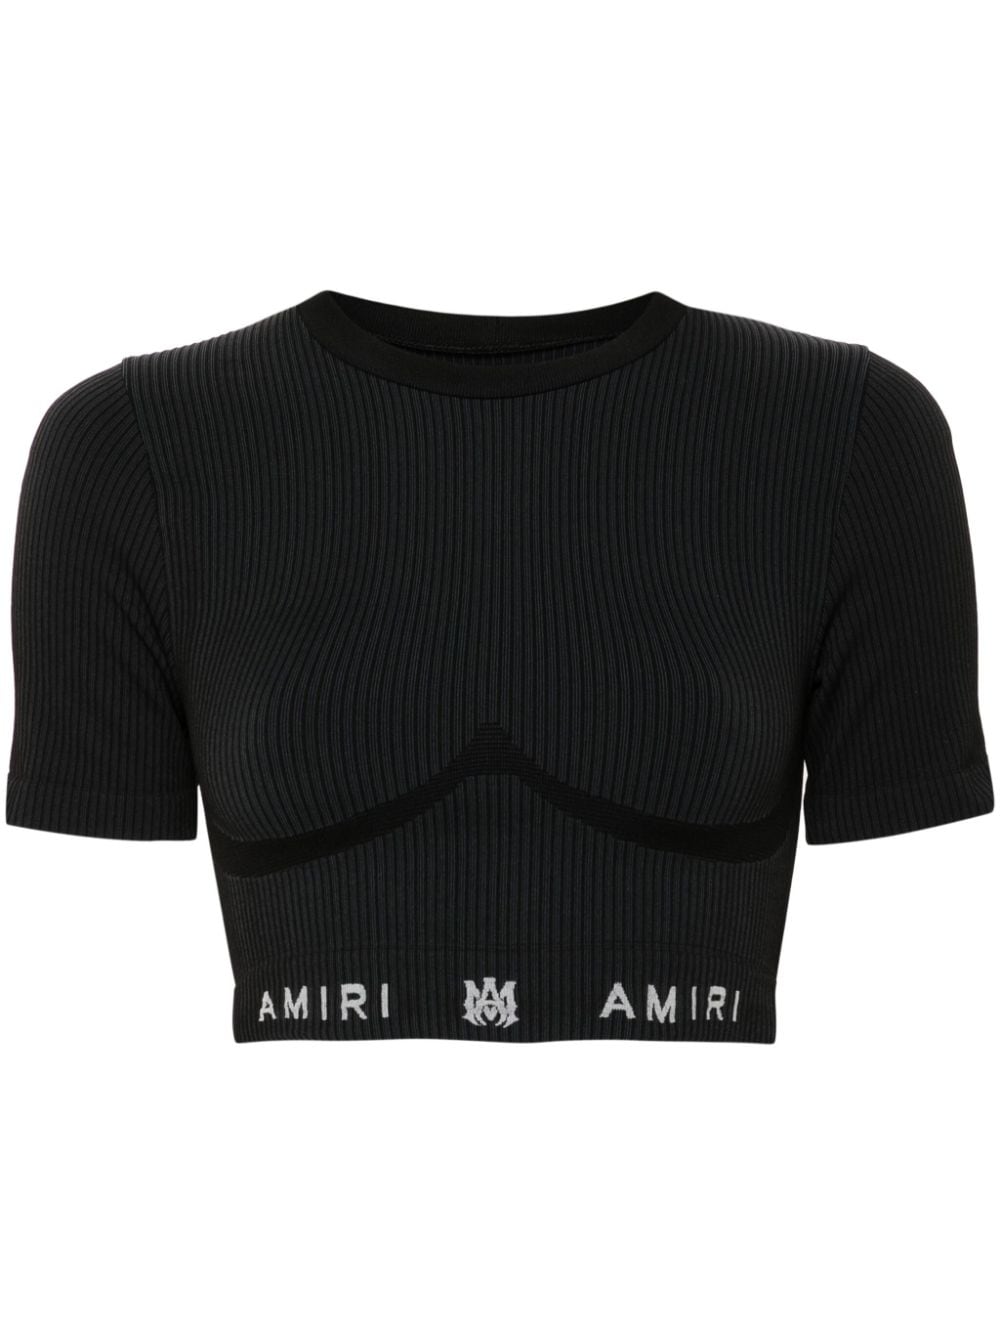 AMIRI cropped ribbed top - Black von AMIRI